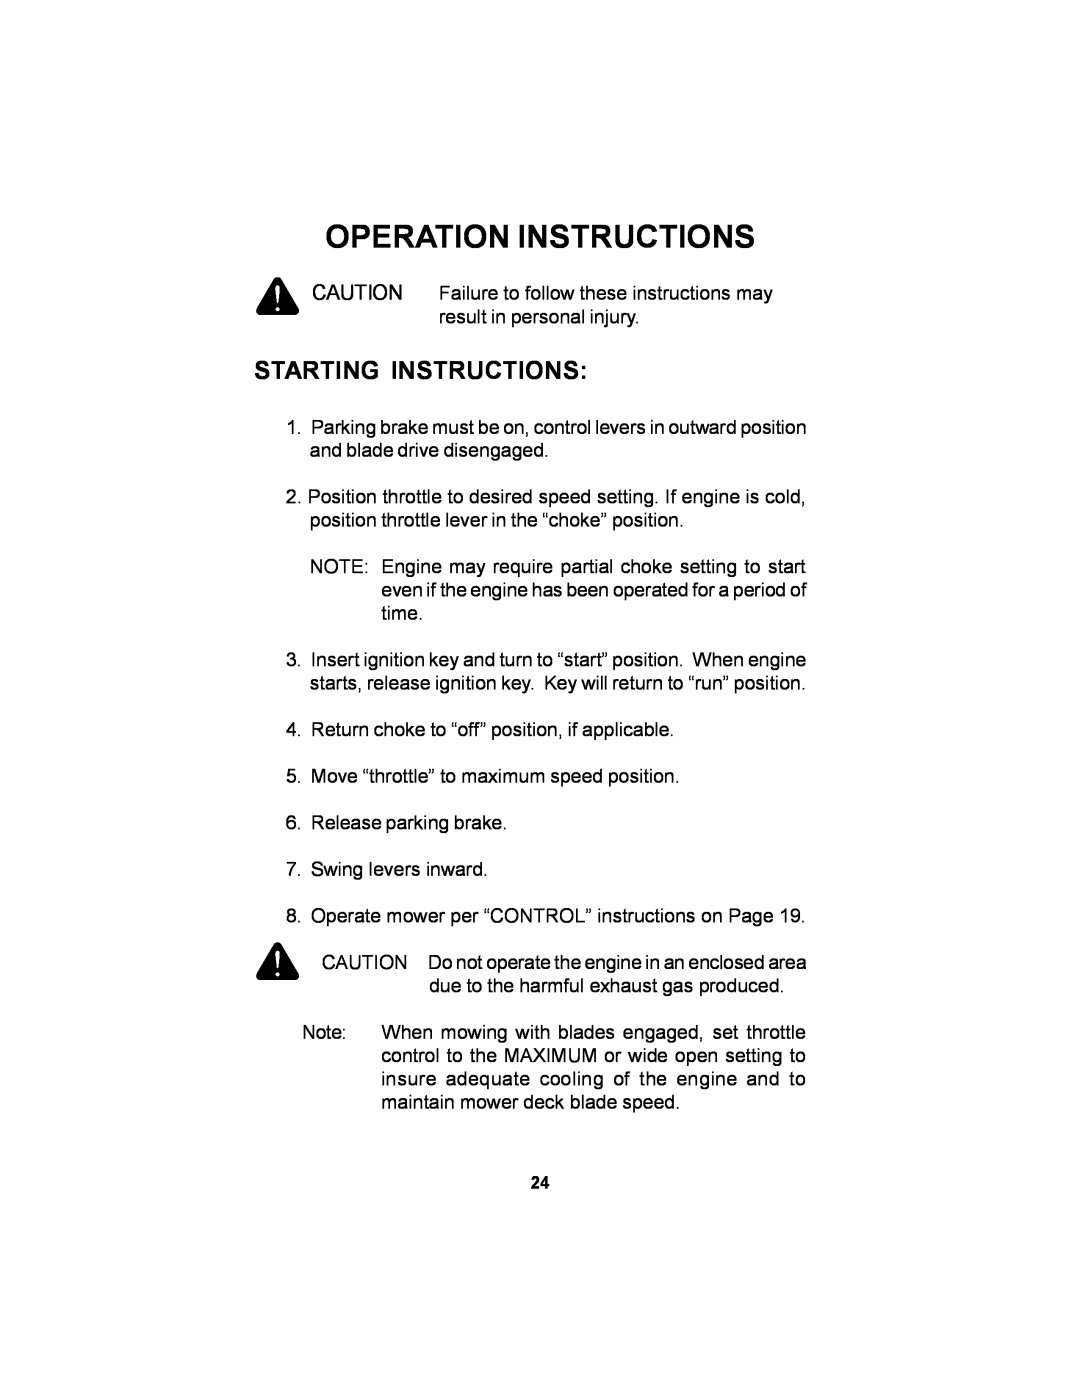 Dixon 11249-106 manual Starting Instructions, Operation Instructions 